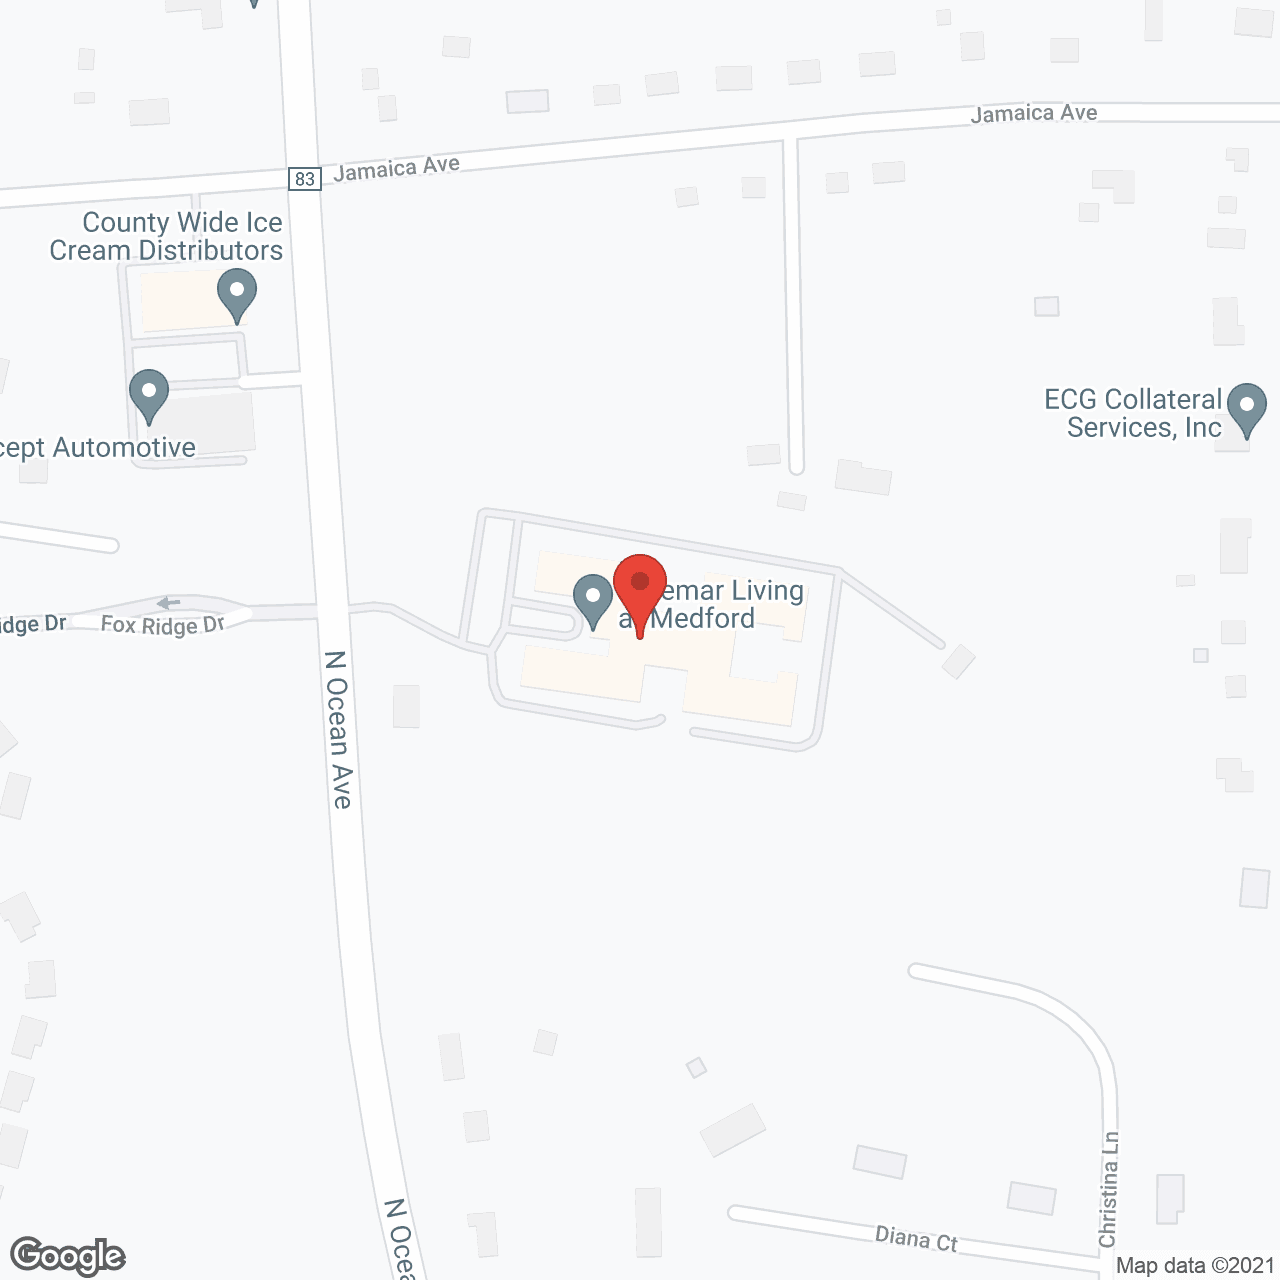 Braemar Living at Medford in google map